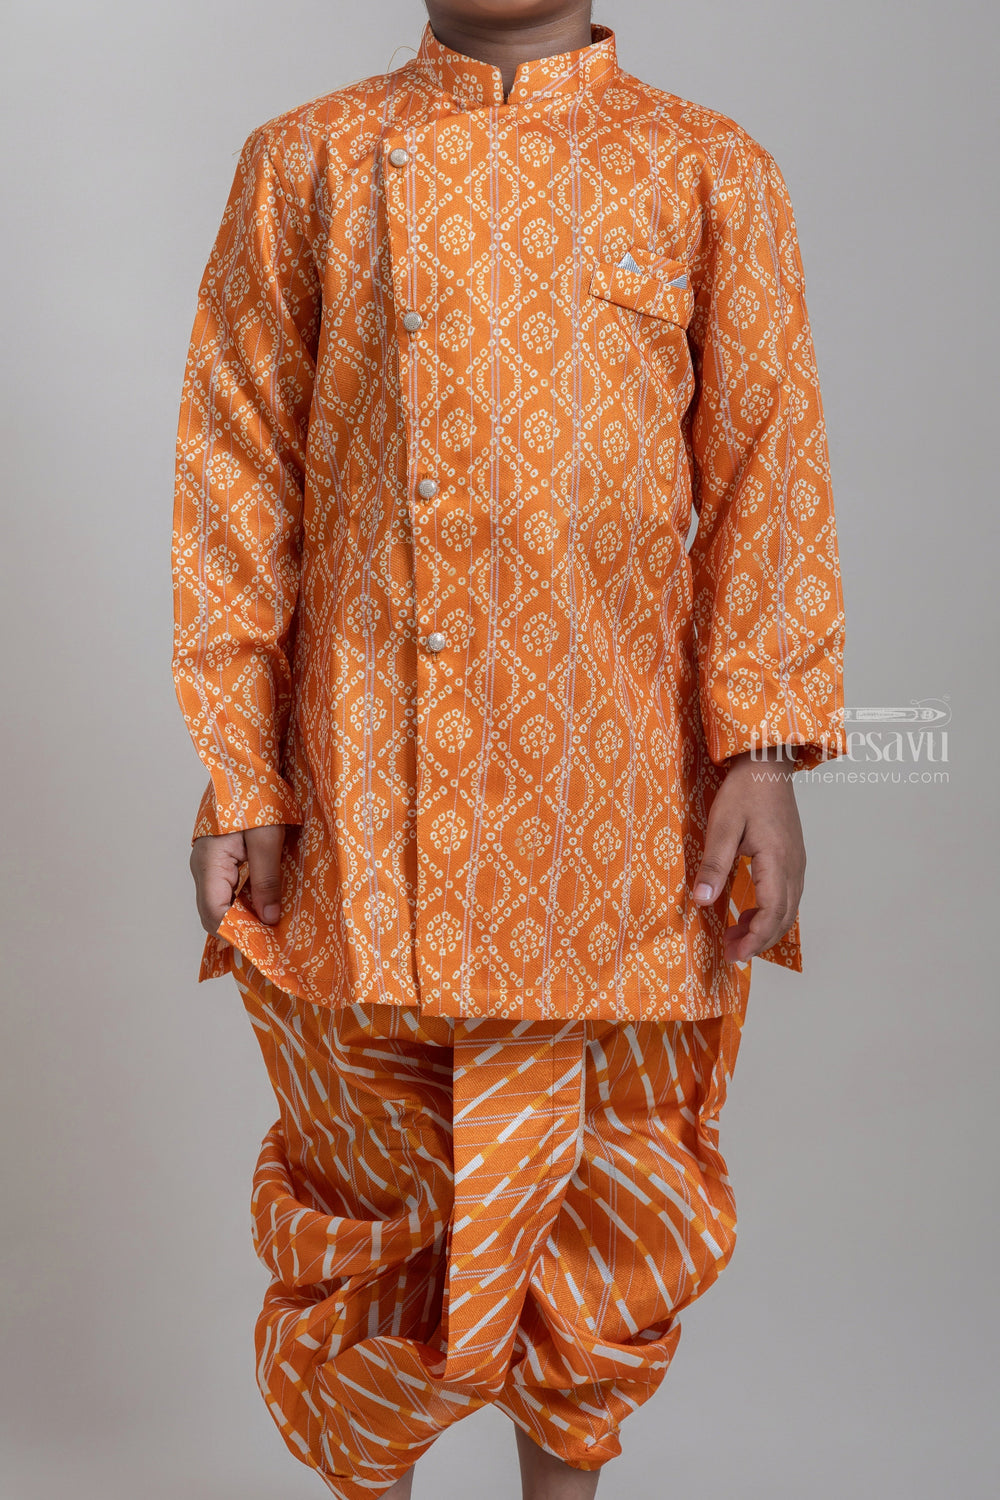 The Nesavu Ethnic Sets Fancy Orange Bandani Printed Cotton Kurta Set For Little Boys psr silks Nesavu